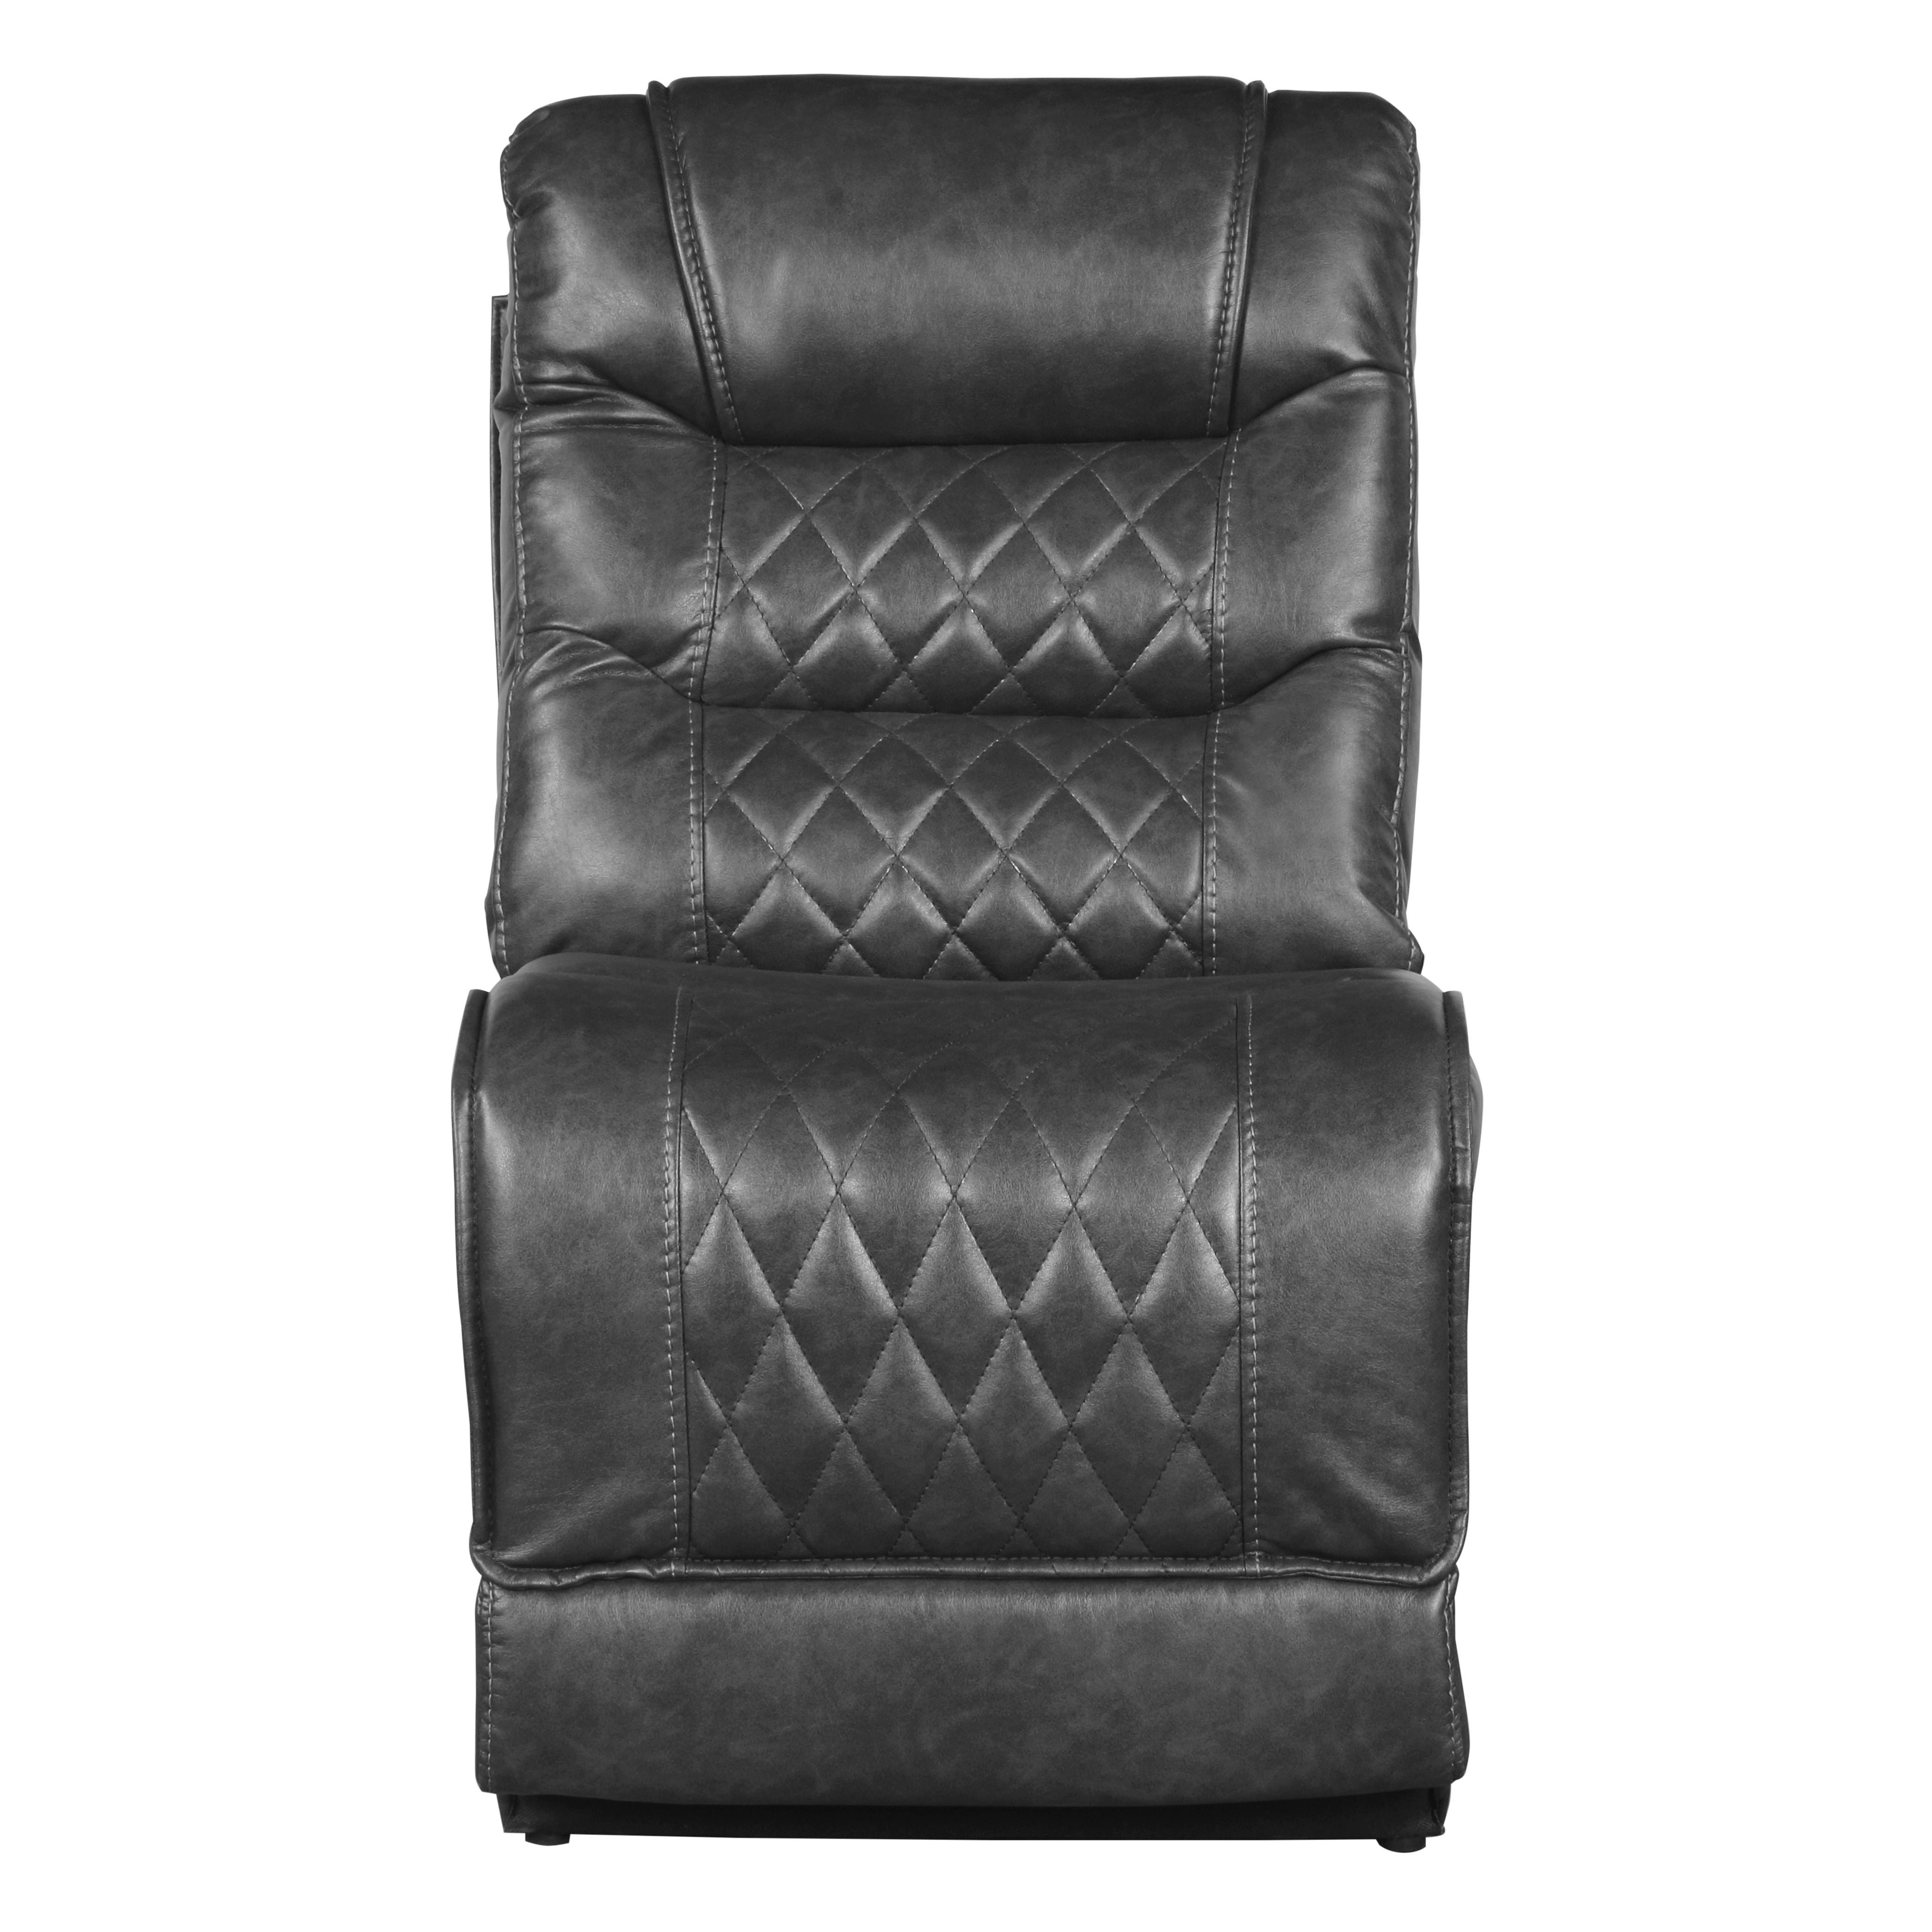 Modern Armless Chair 9405GY-AC Putnam 9405GY-AC in Gray Microfiber